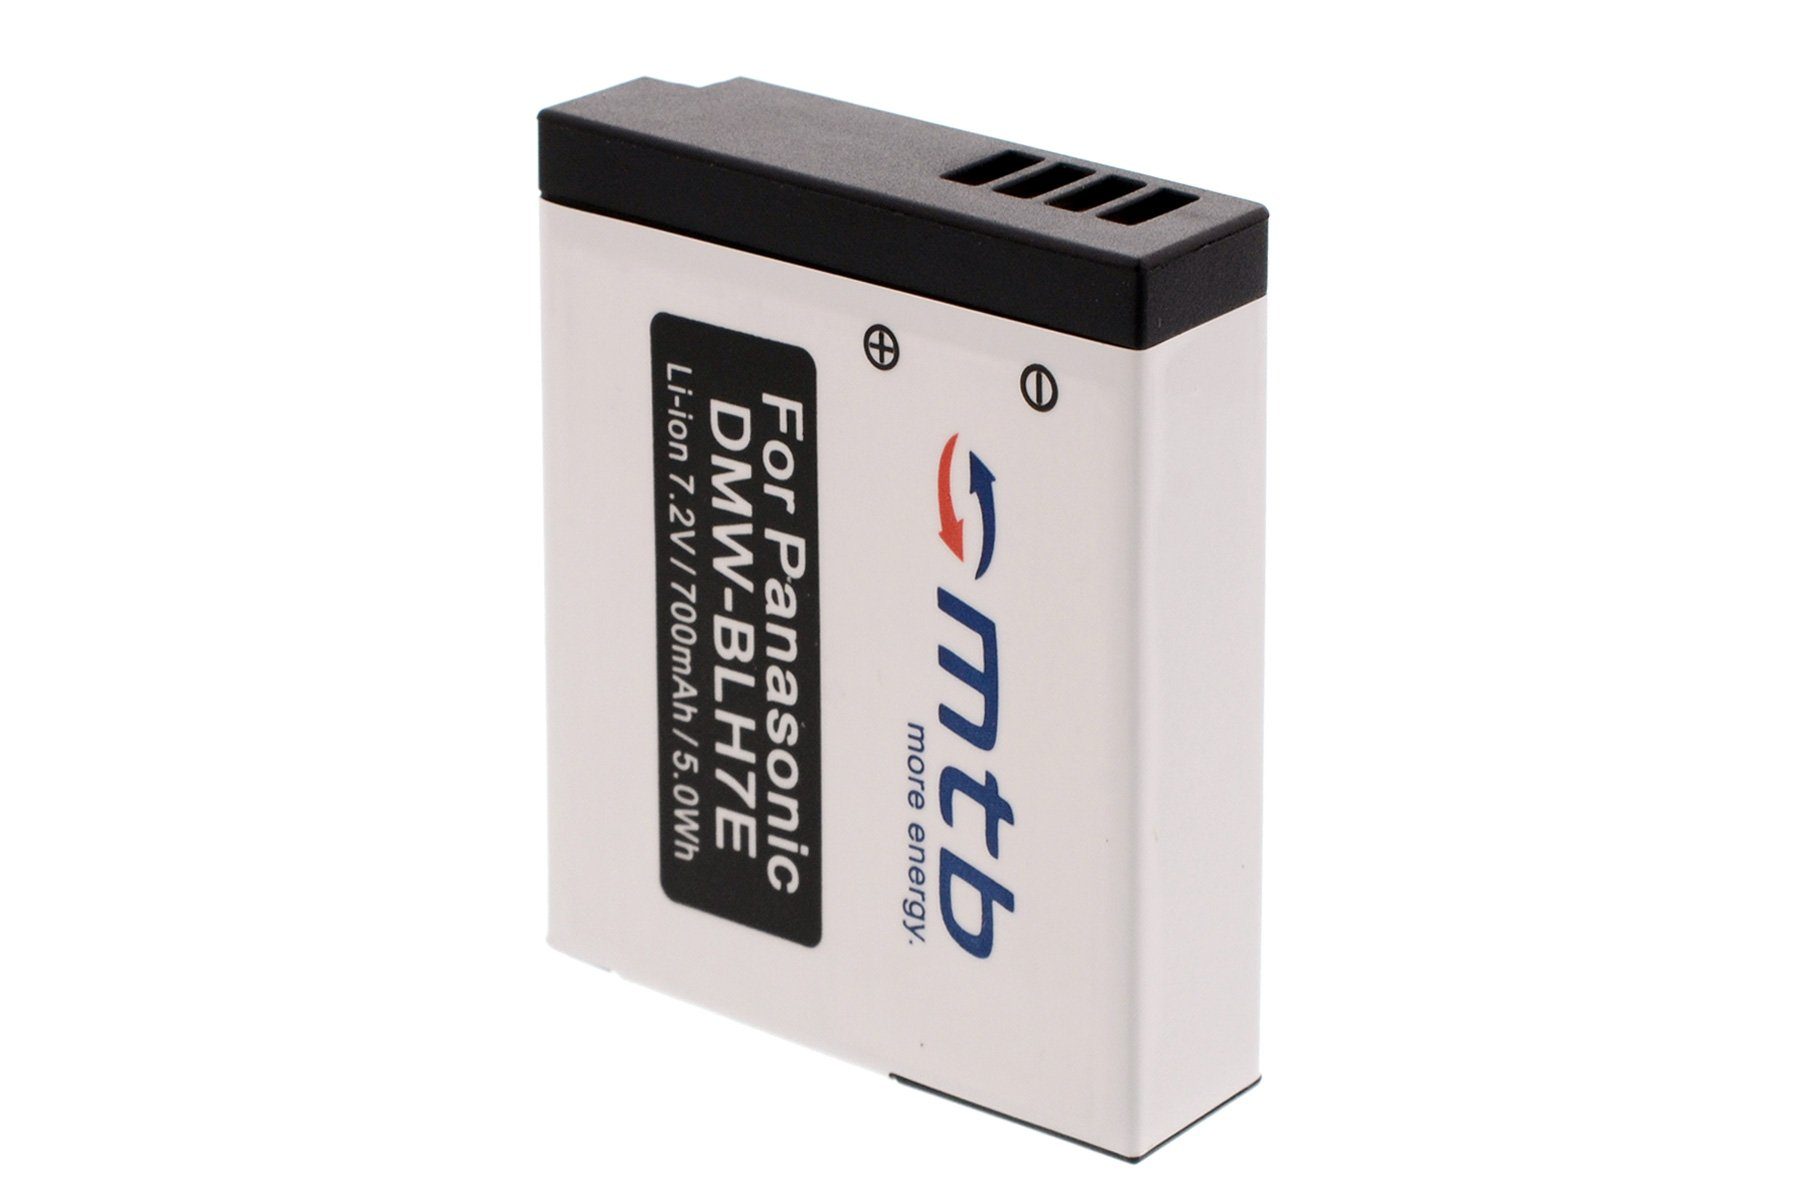 mtb more energy Kamera-Akku - DMC-GF7… Panasonic Panasonic kompatibel mit Li-Ion] [BAT-409 passend Lumix V), mAh für: (7,2 Akku-Typ 700 DMW-BLH7